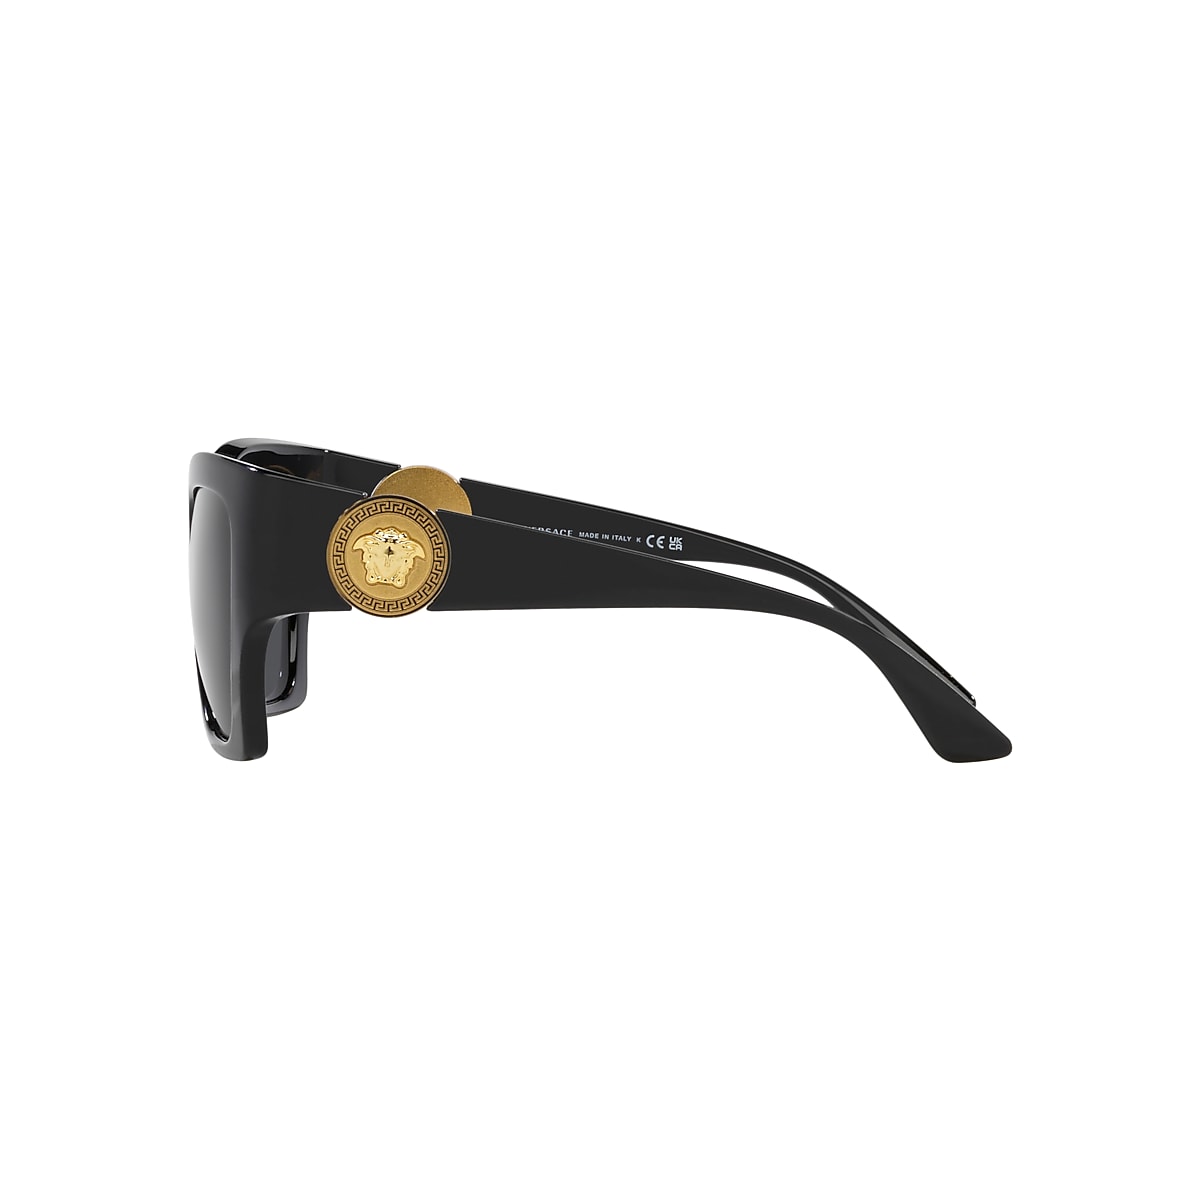 VERSACE VE4452 Black - Woman Luxury Sunglasses, Dark Grey Lens